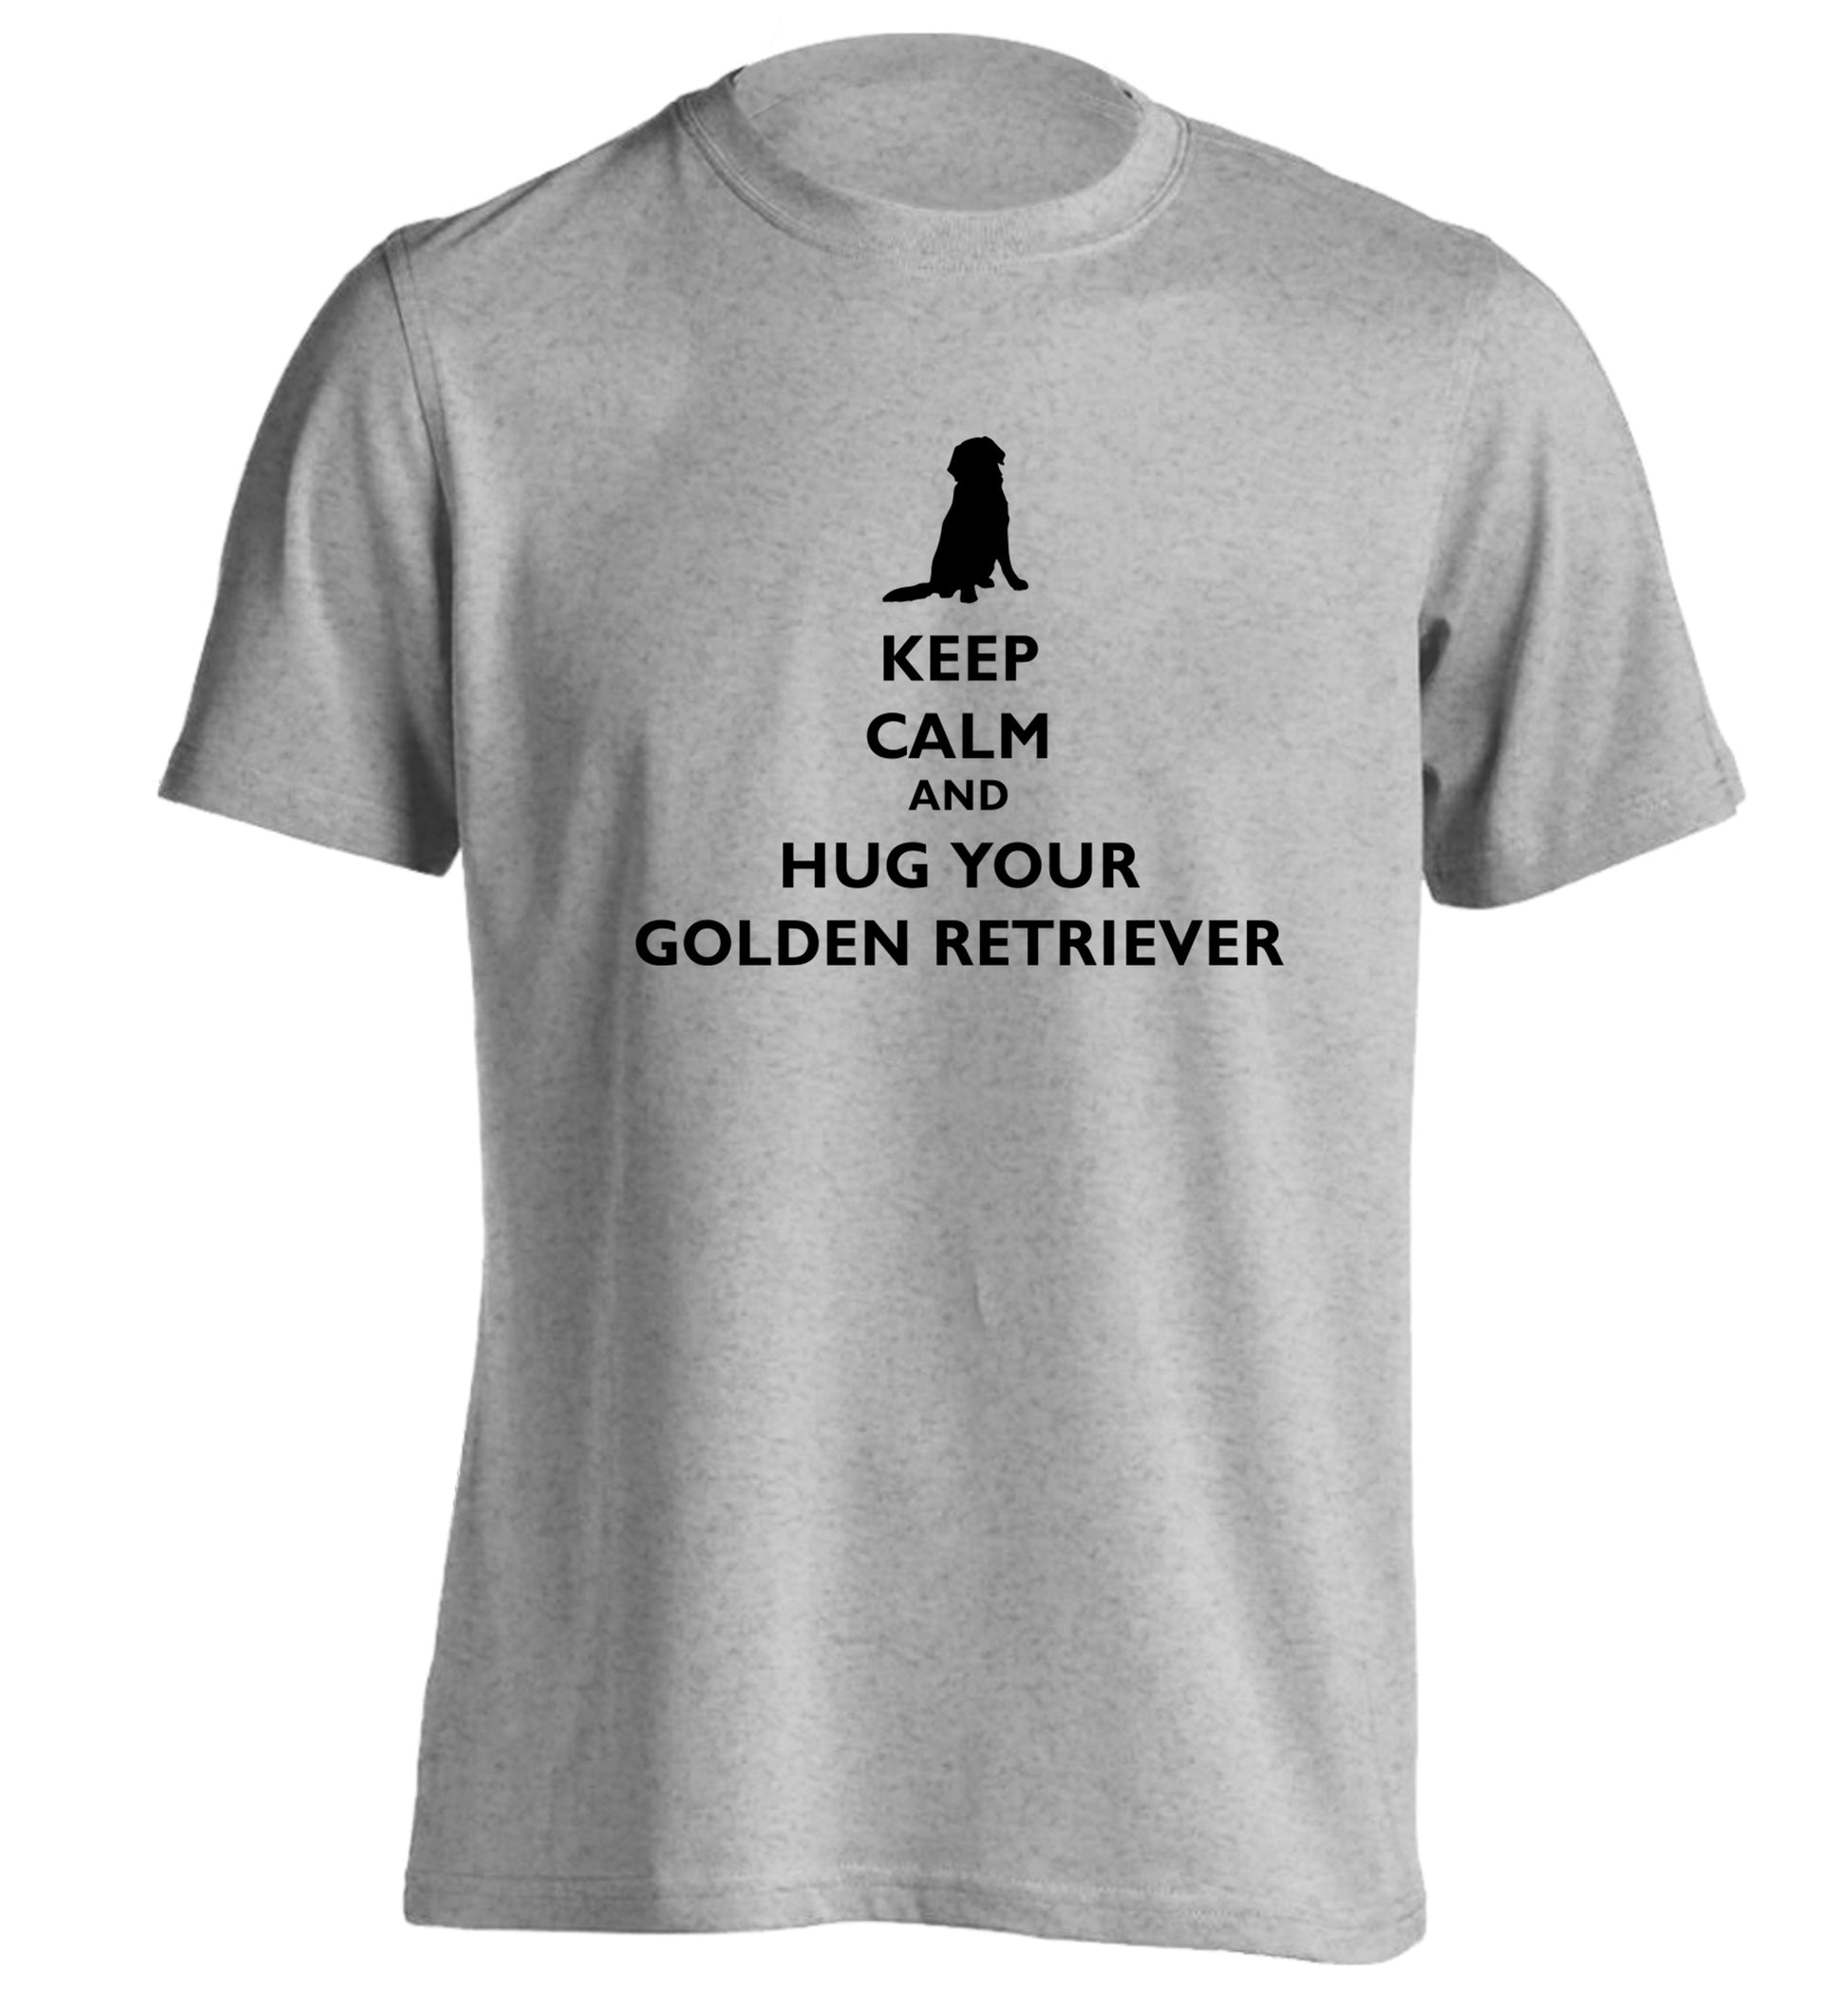 Keep calm and hug your golden retriever adults unisex grey Tshirt 2XL